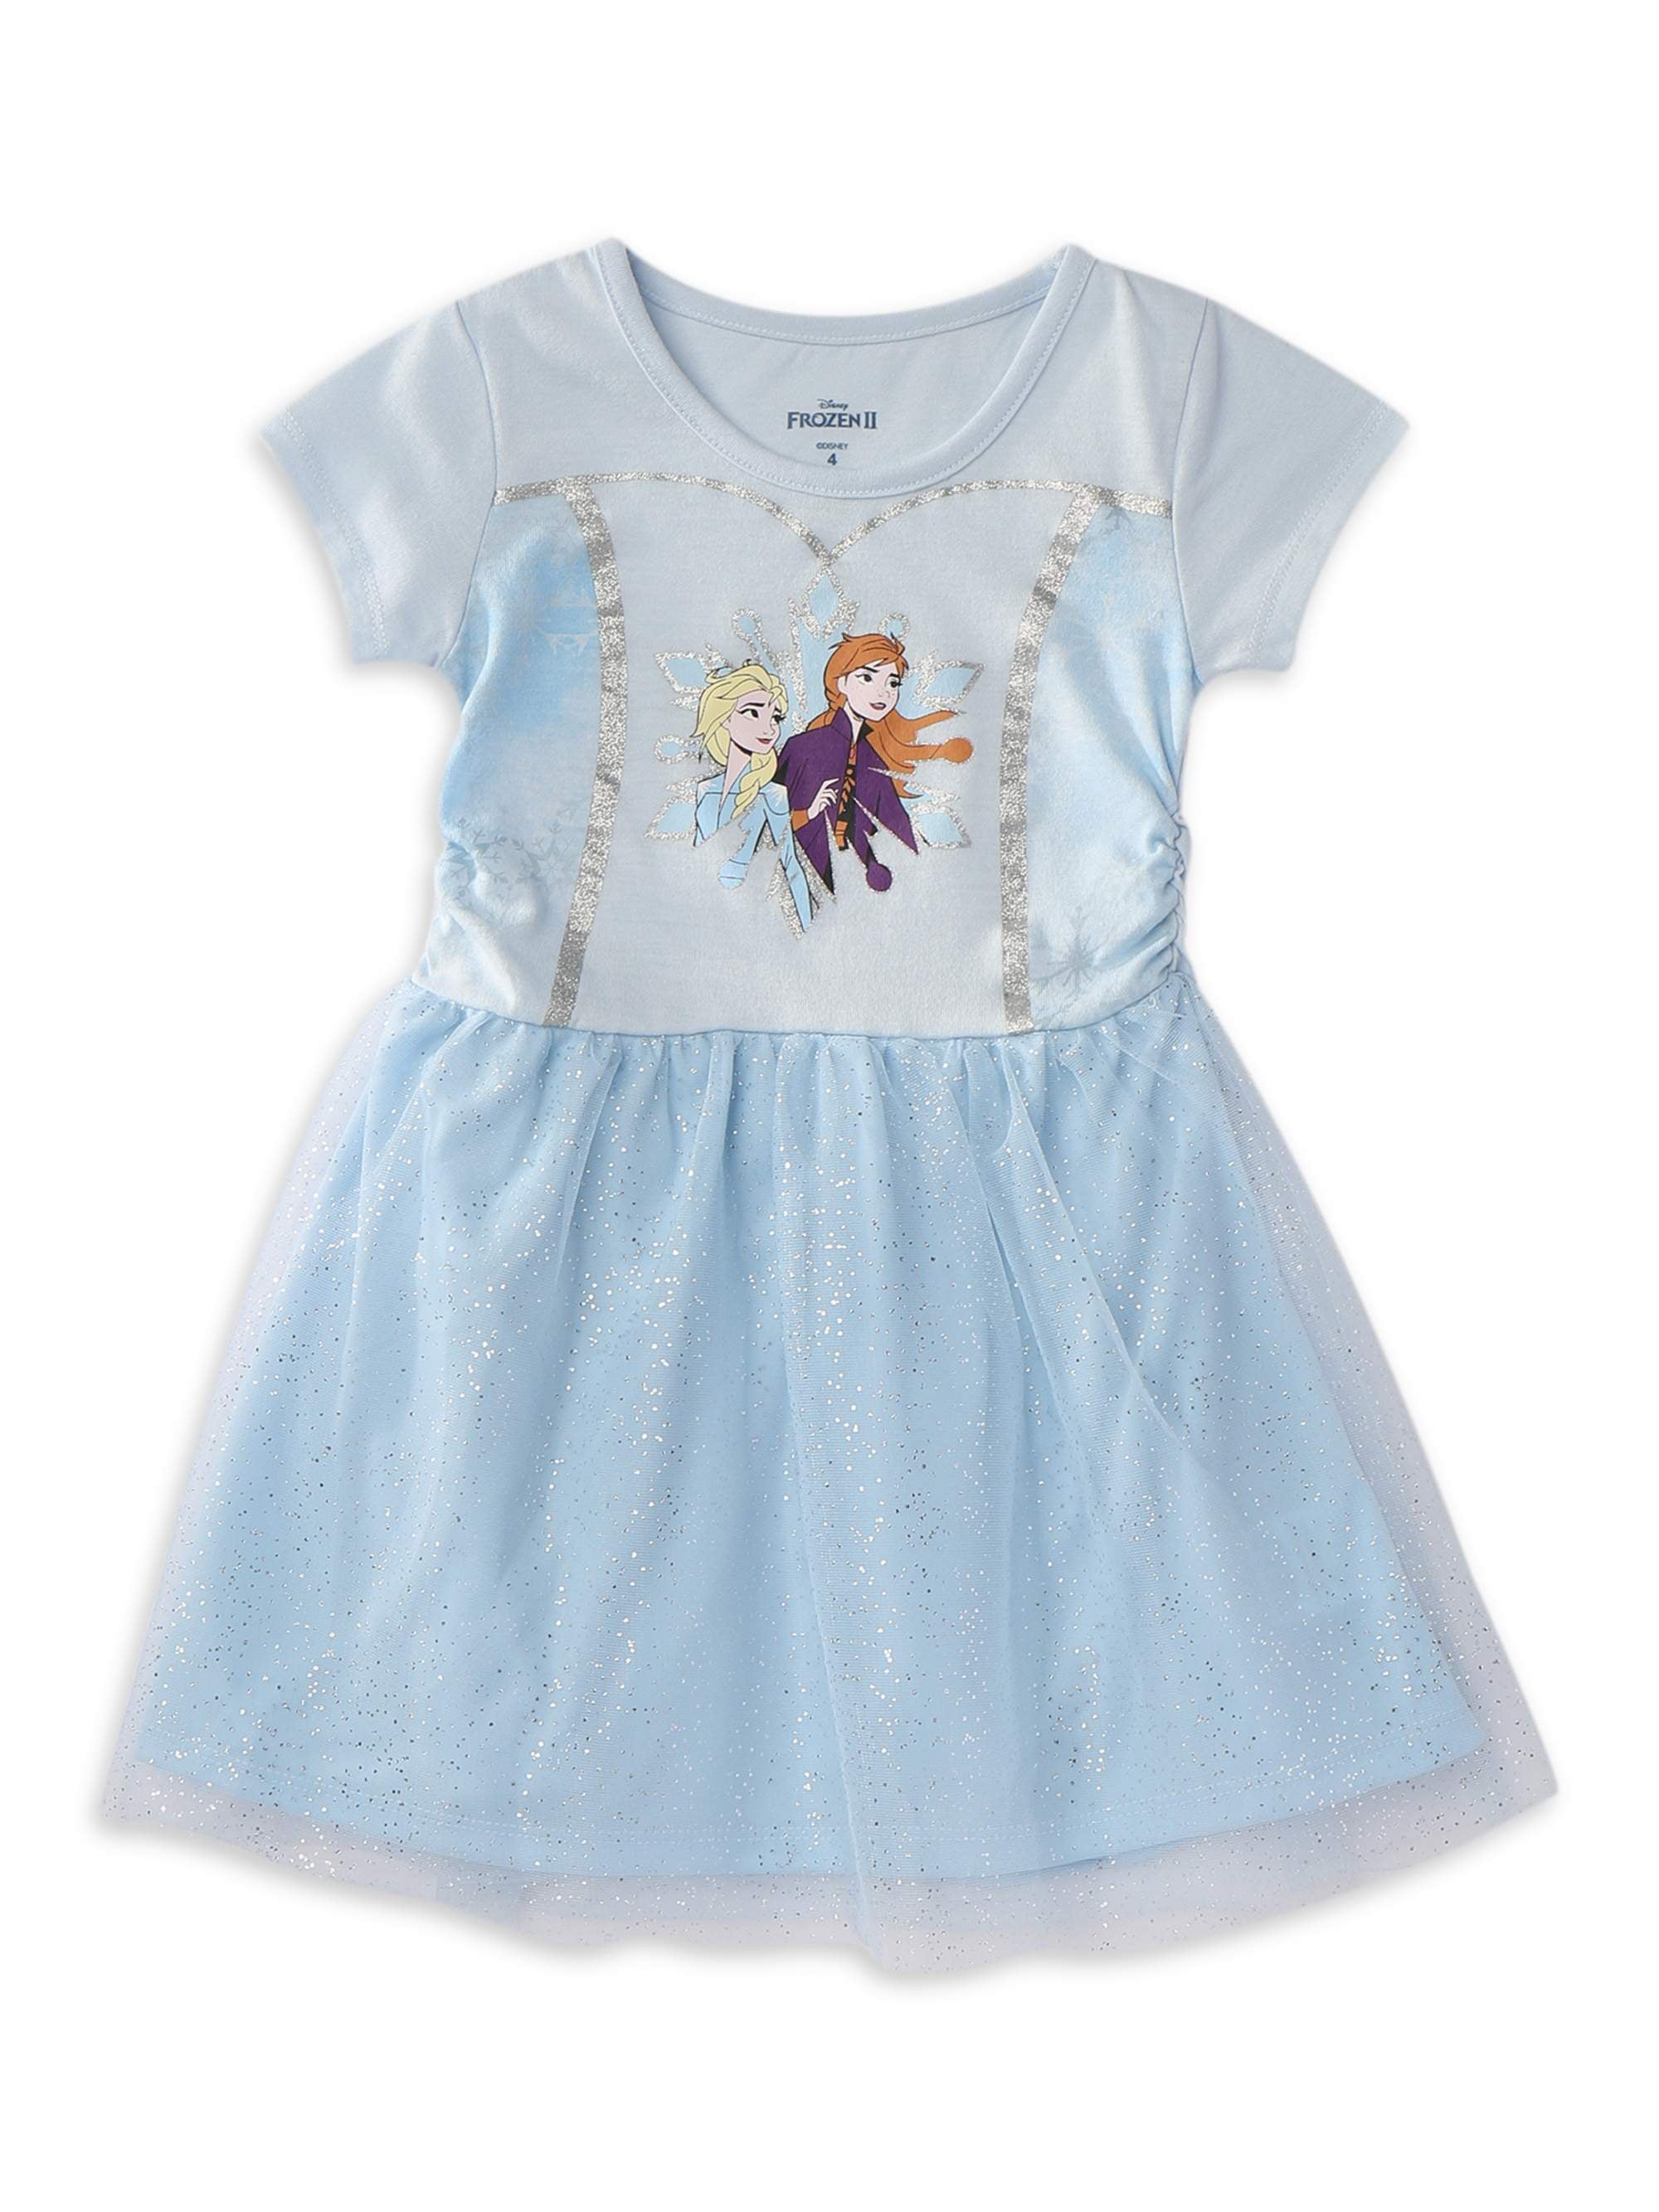 Disney Store Frozen Anna Elsa Yellow Knitted Dress Tunic Skirt Girl Size 5/6 